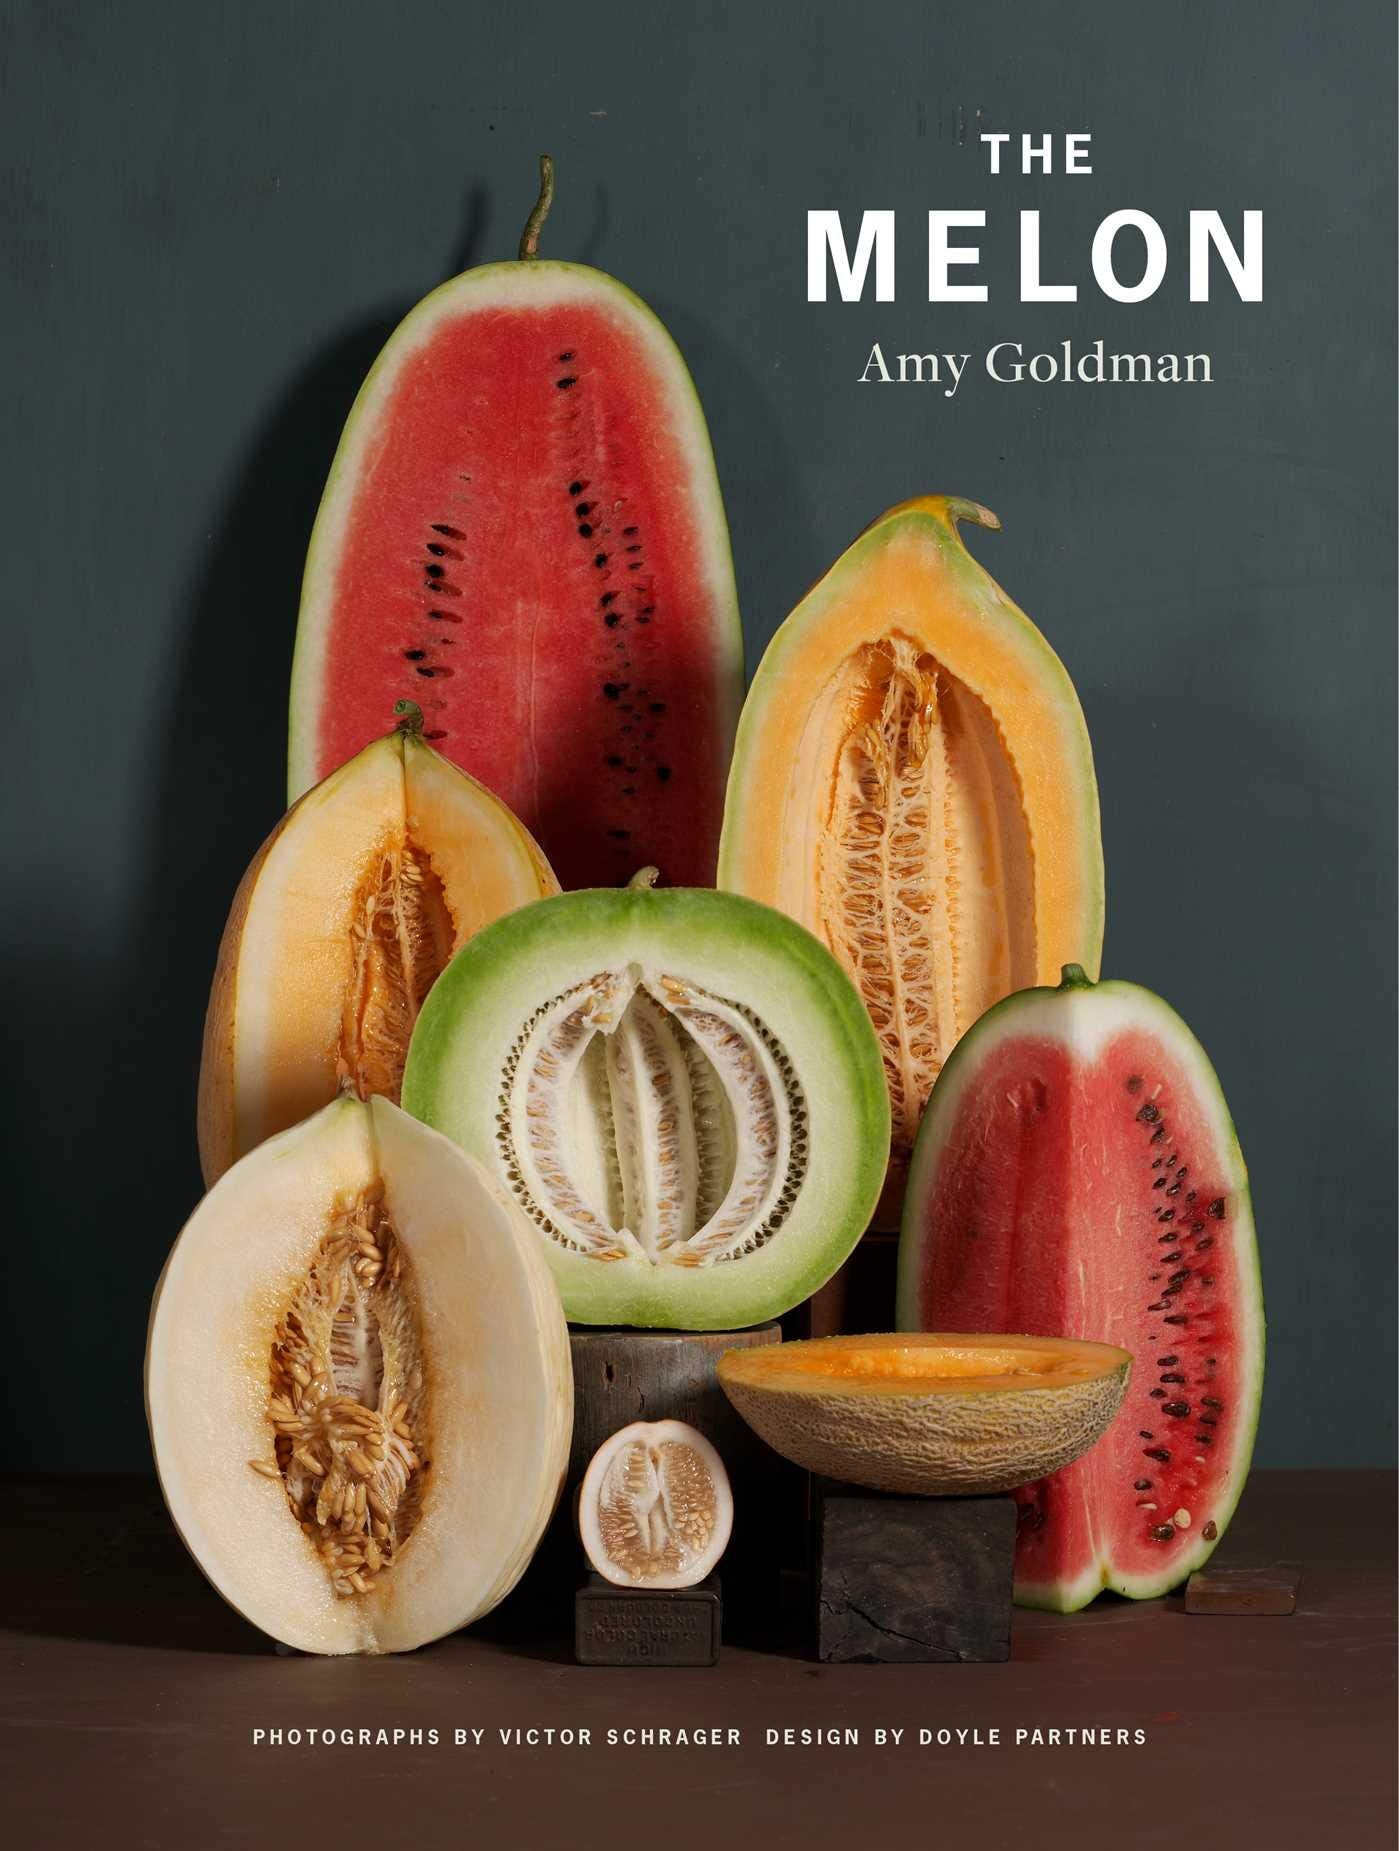 The Melon (Amy Goldman)